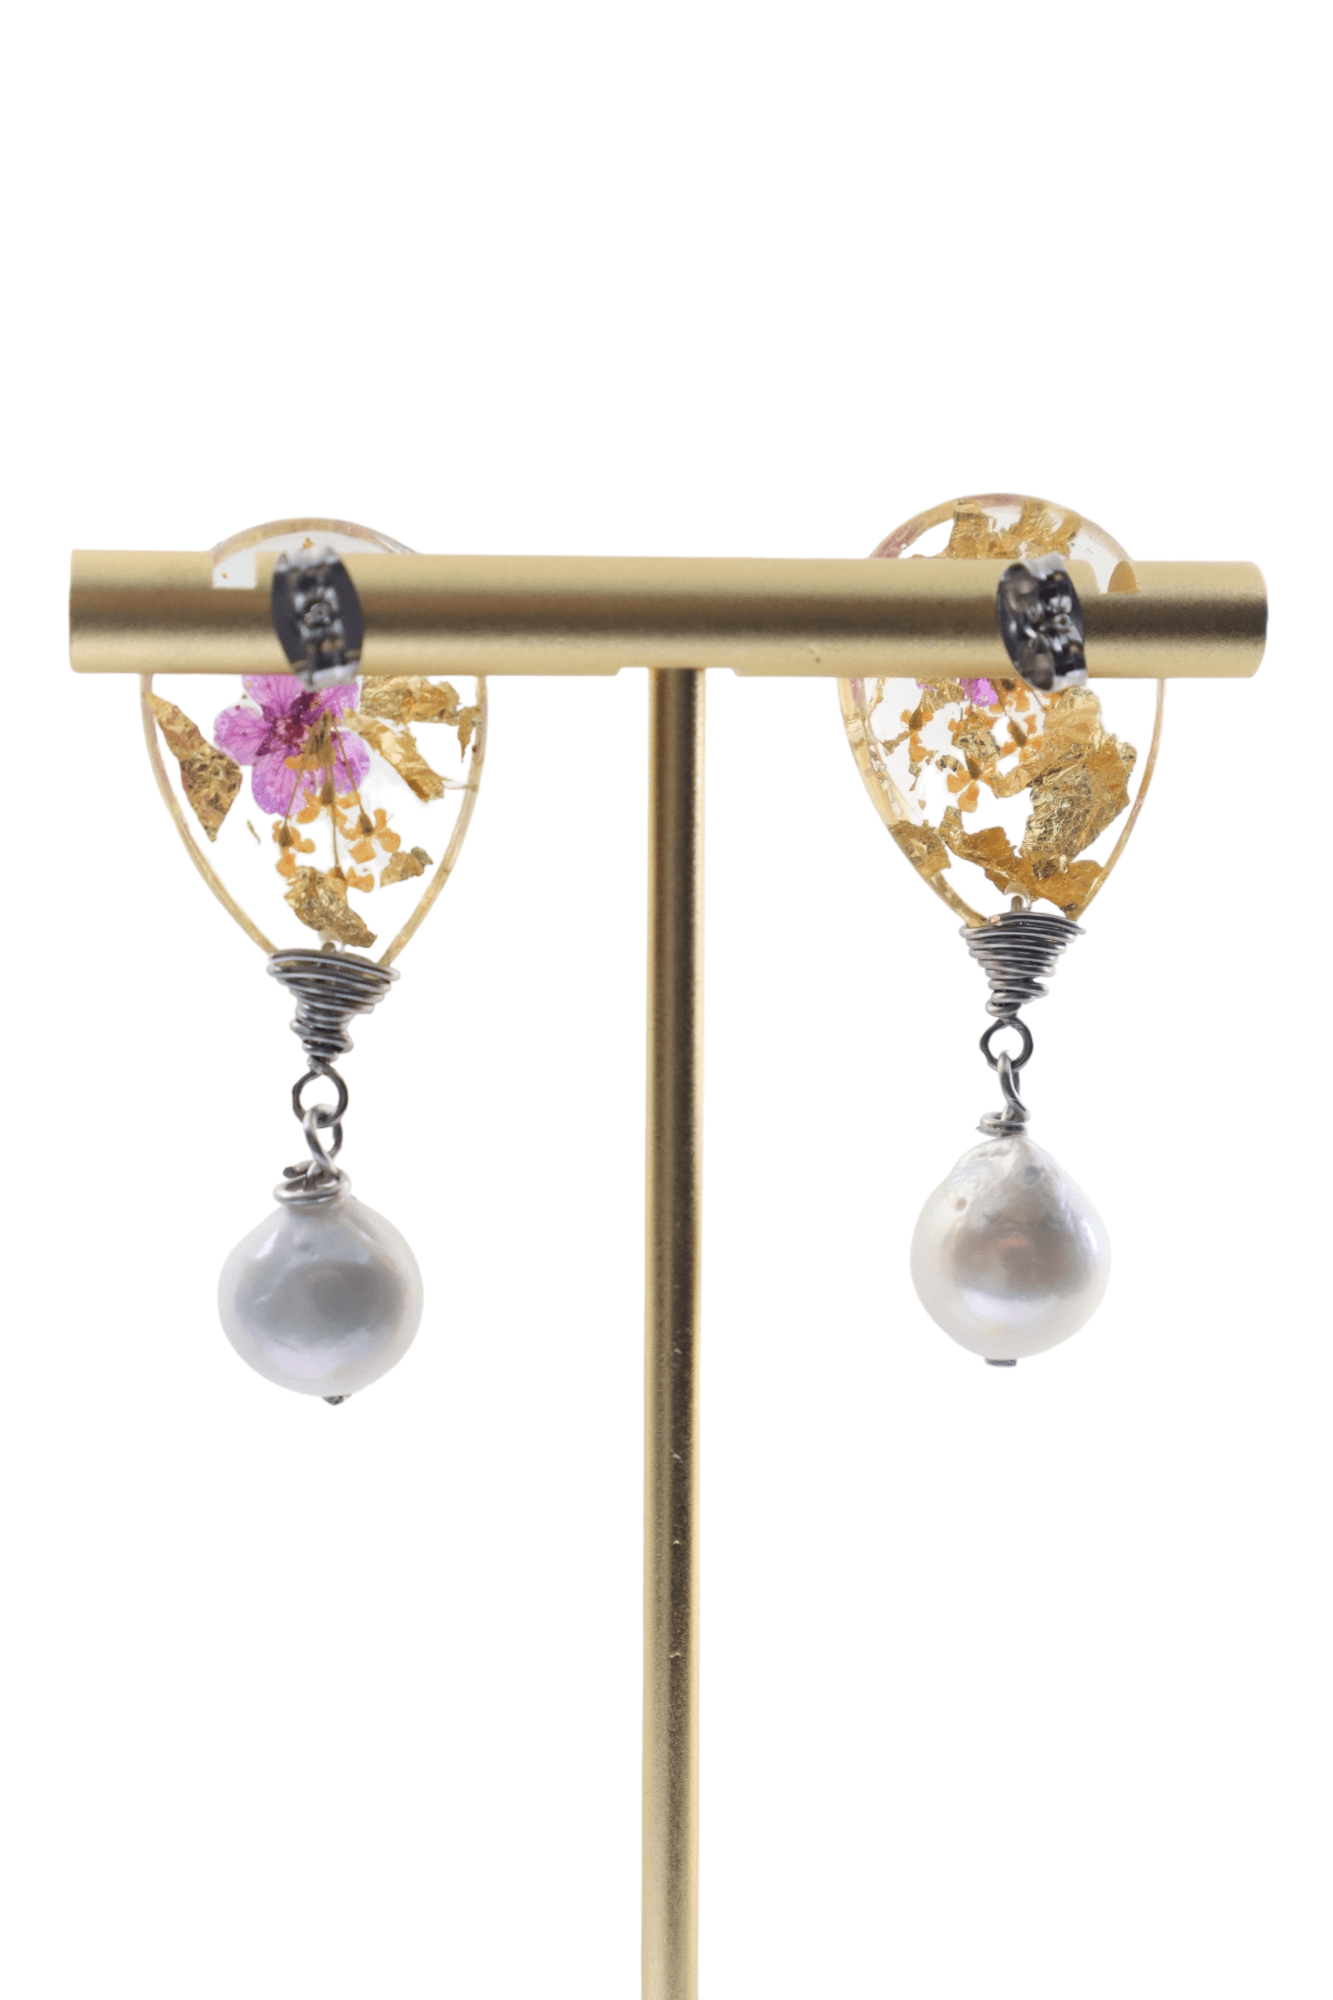 Pearl-drop-earrings-for-wedding-flower-jewelry-vintage-inspired-earrings-Kaleidoscopes-And-Polka-Dots